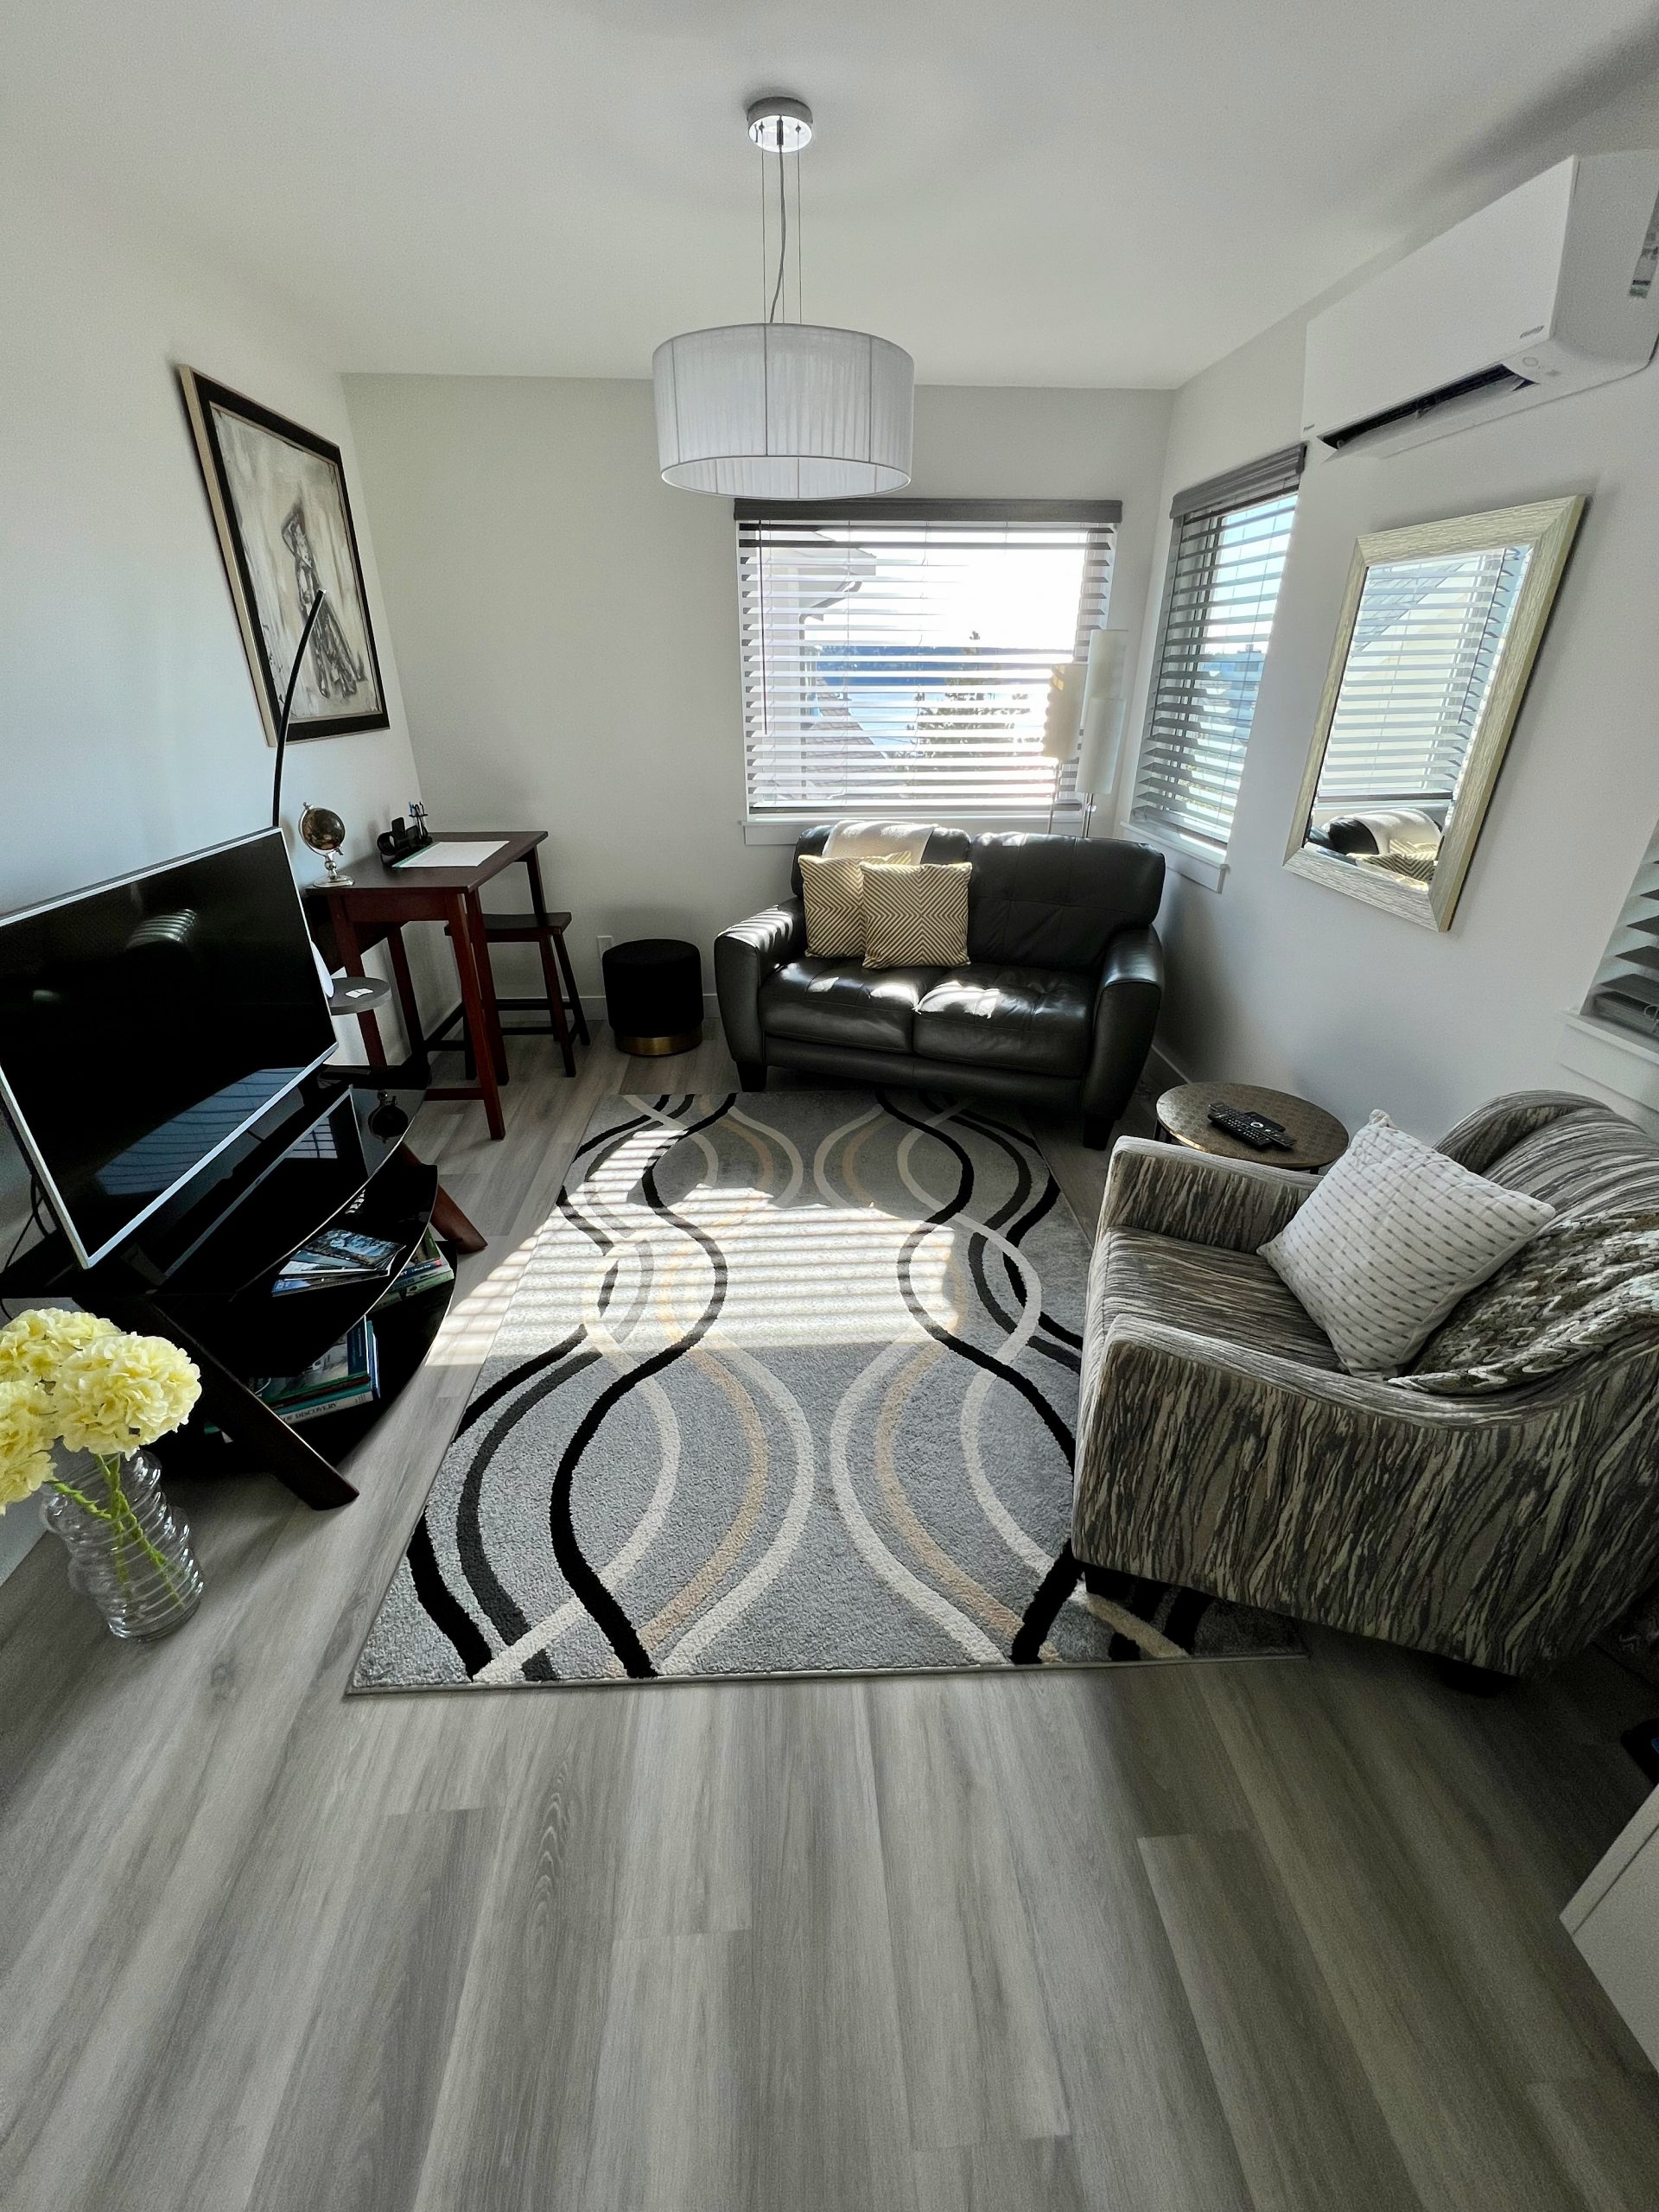 oceanview suite living room